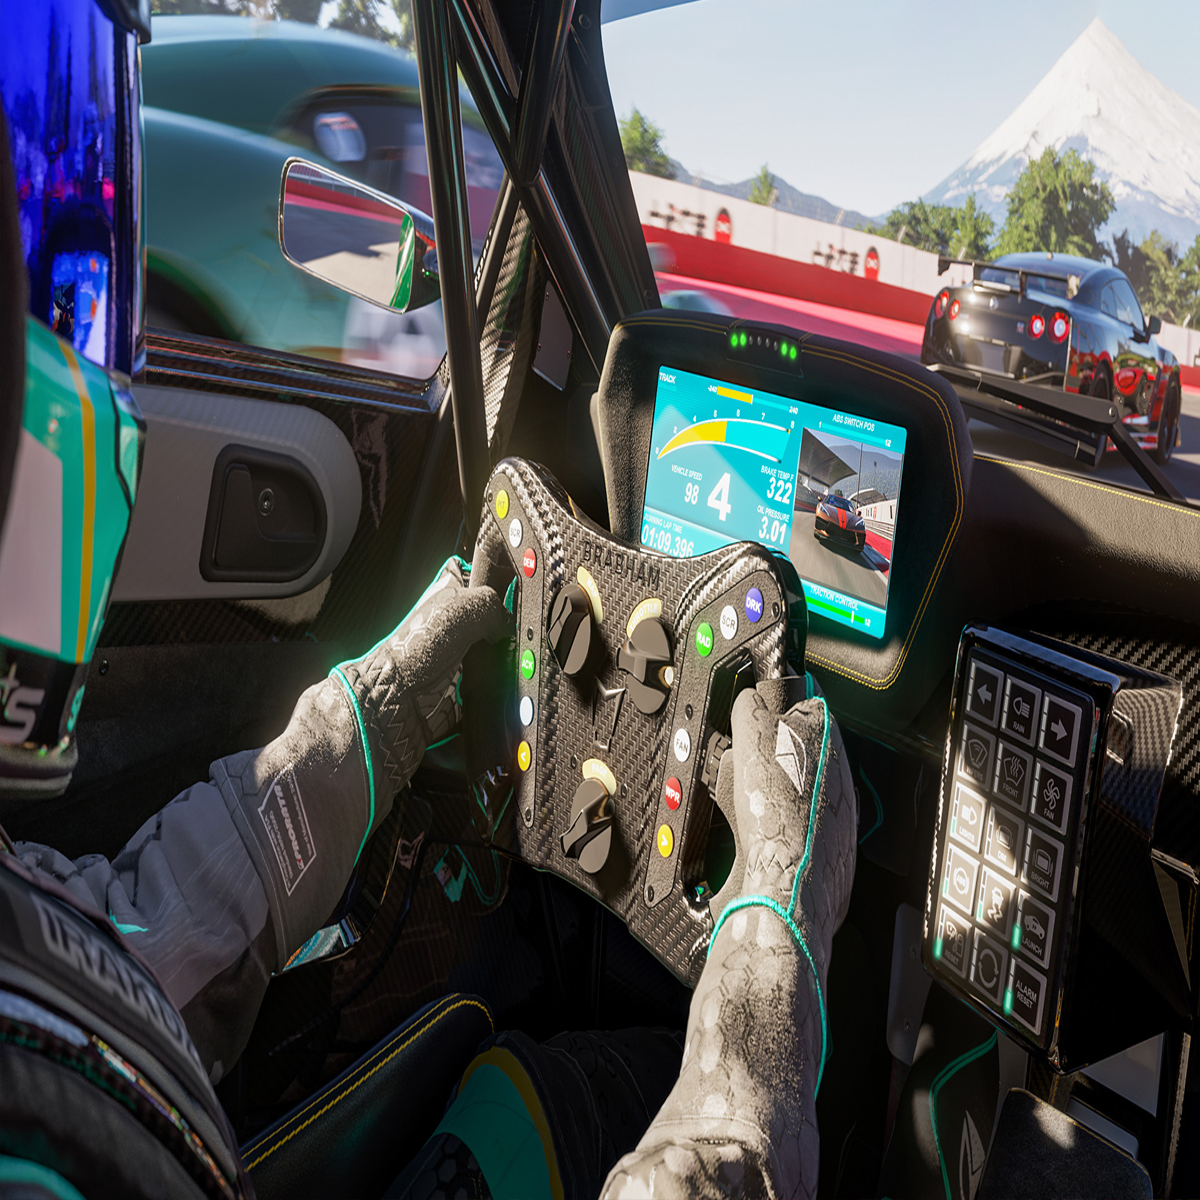 Novo Forza Motorsport irá rodar a 4K/60 fps e terá suporte ao Ray Tracing